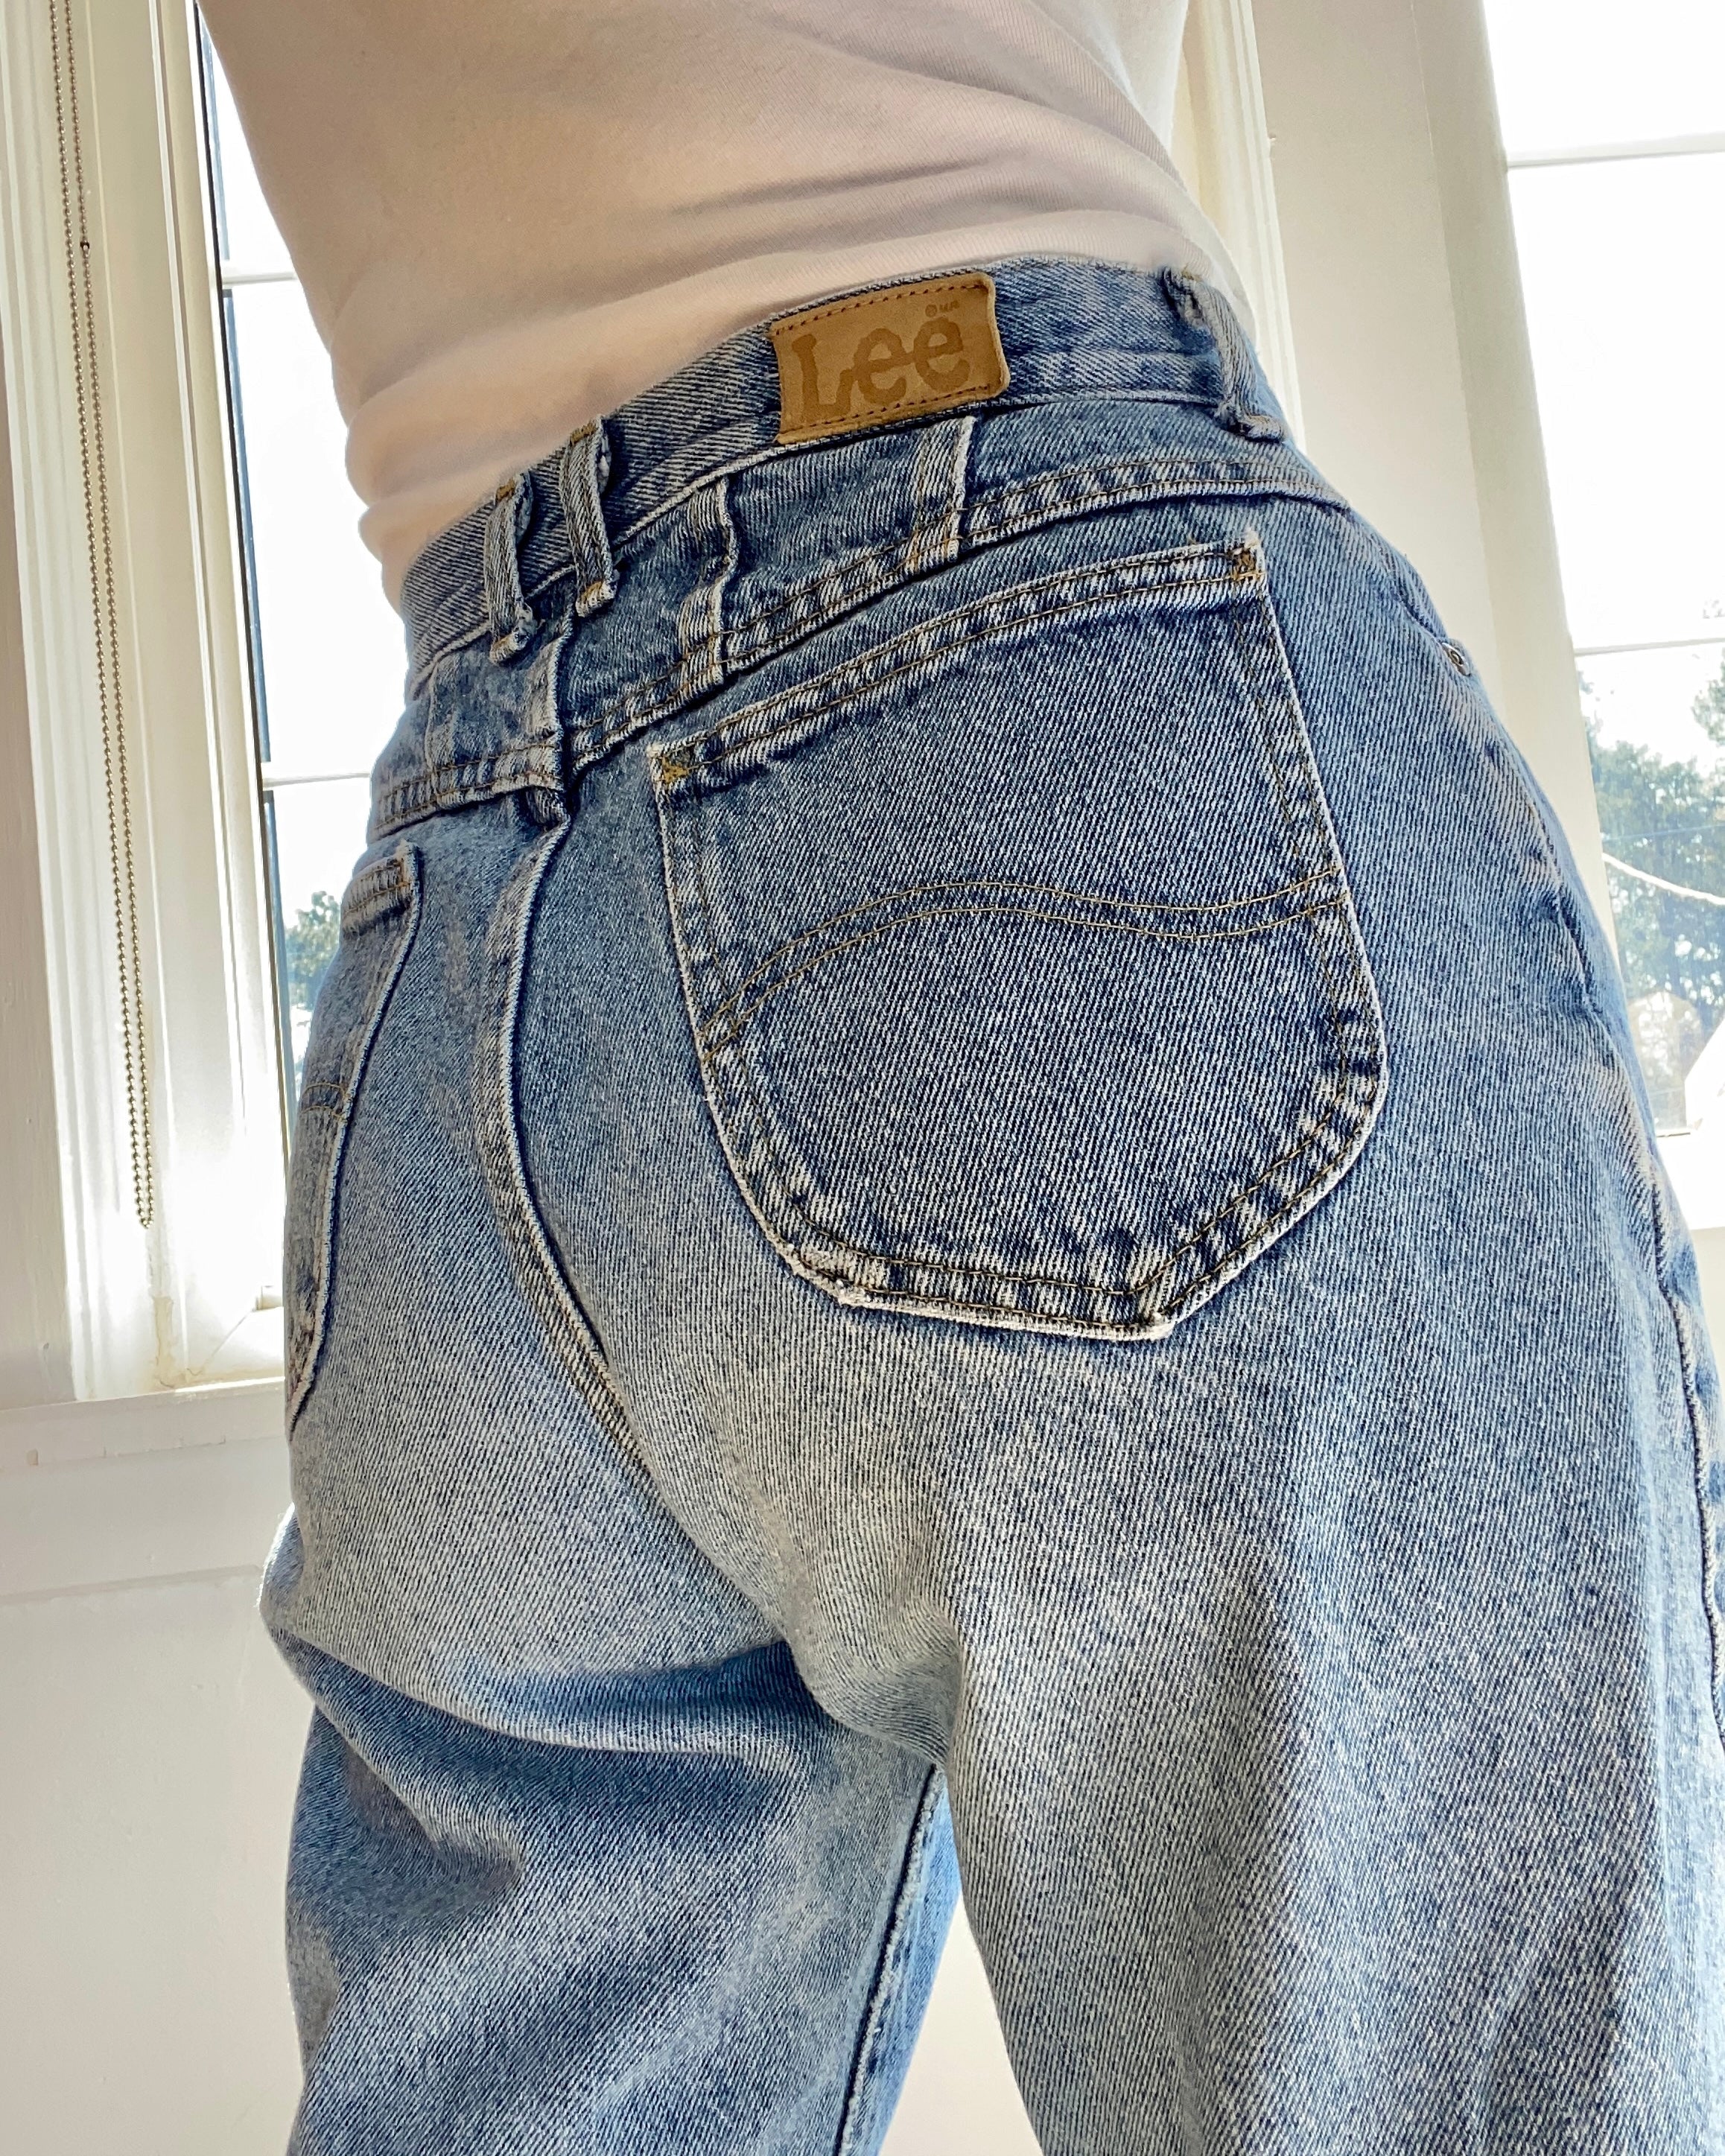 Vintage LEEs Made in USA Light Wash Jeans size 29